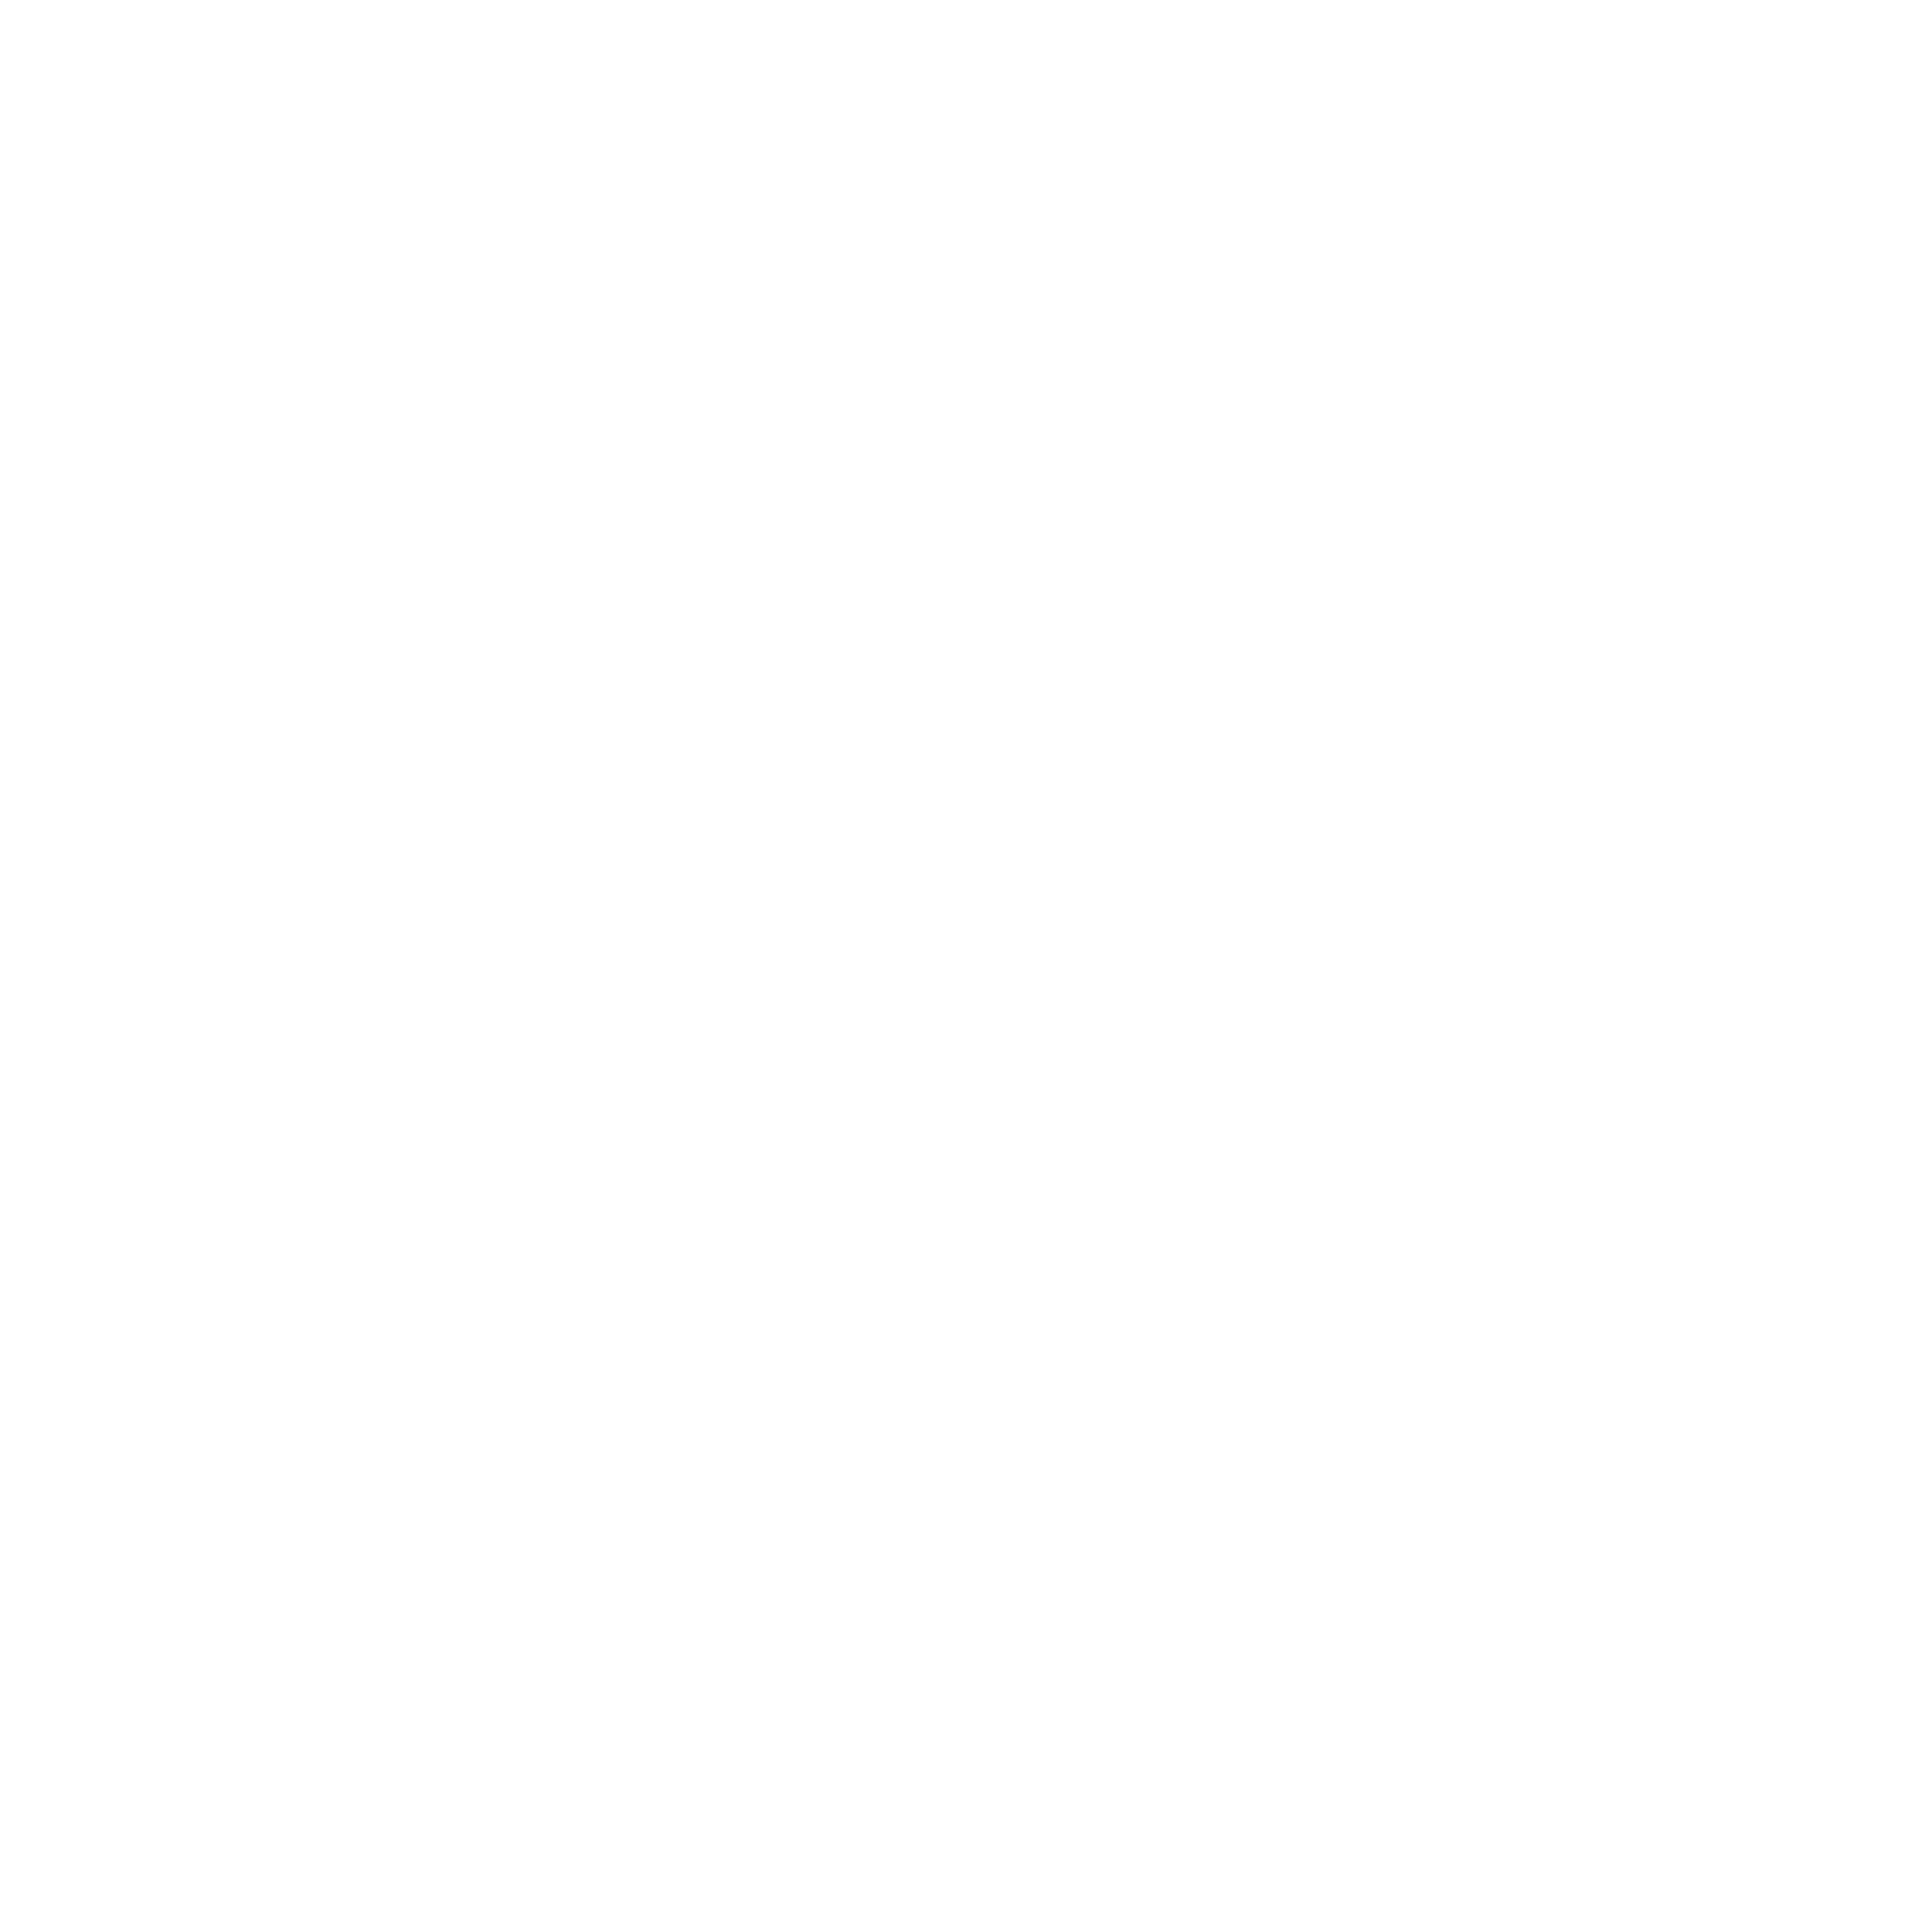 Thrifty Car Rental Logo - Thrifty Car Rental Logo PNG Transparent & SVG Vector